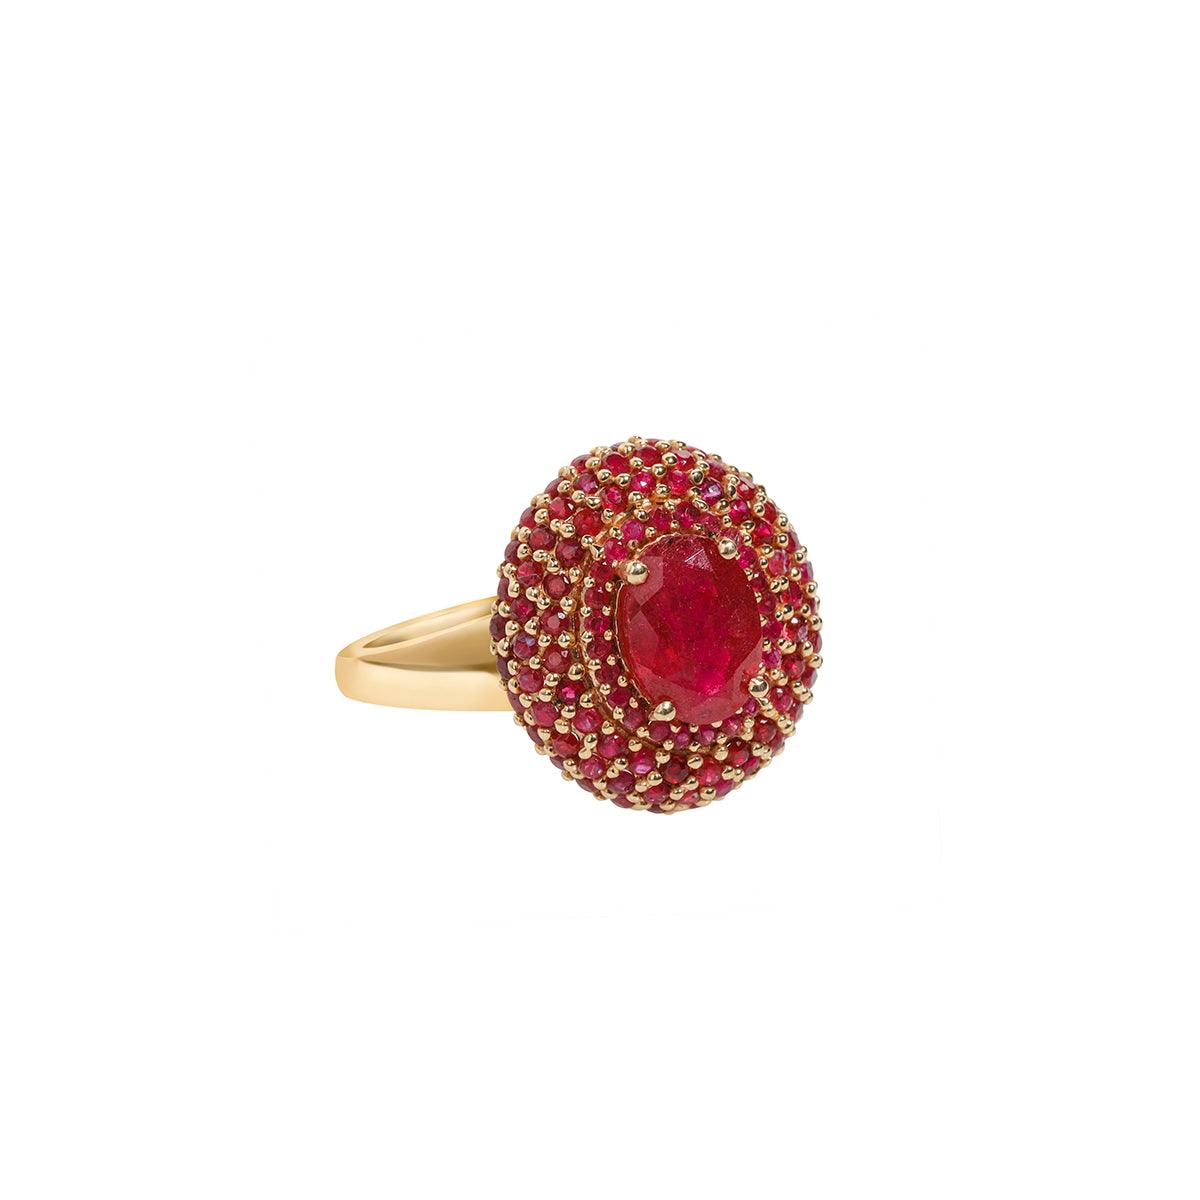 2.29 Ct. Glass Filled Ruby Chunky Ring 14K Yellow Gold Jewelry - YoTreasure